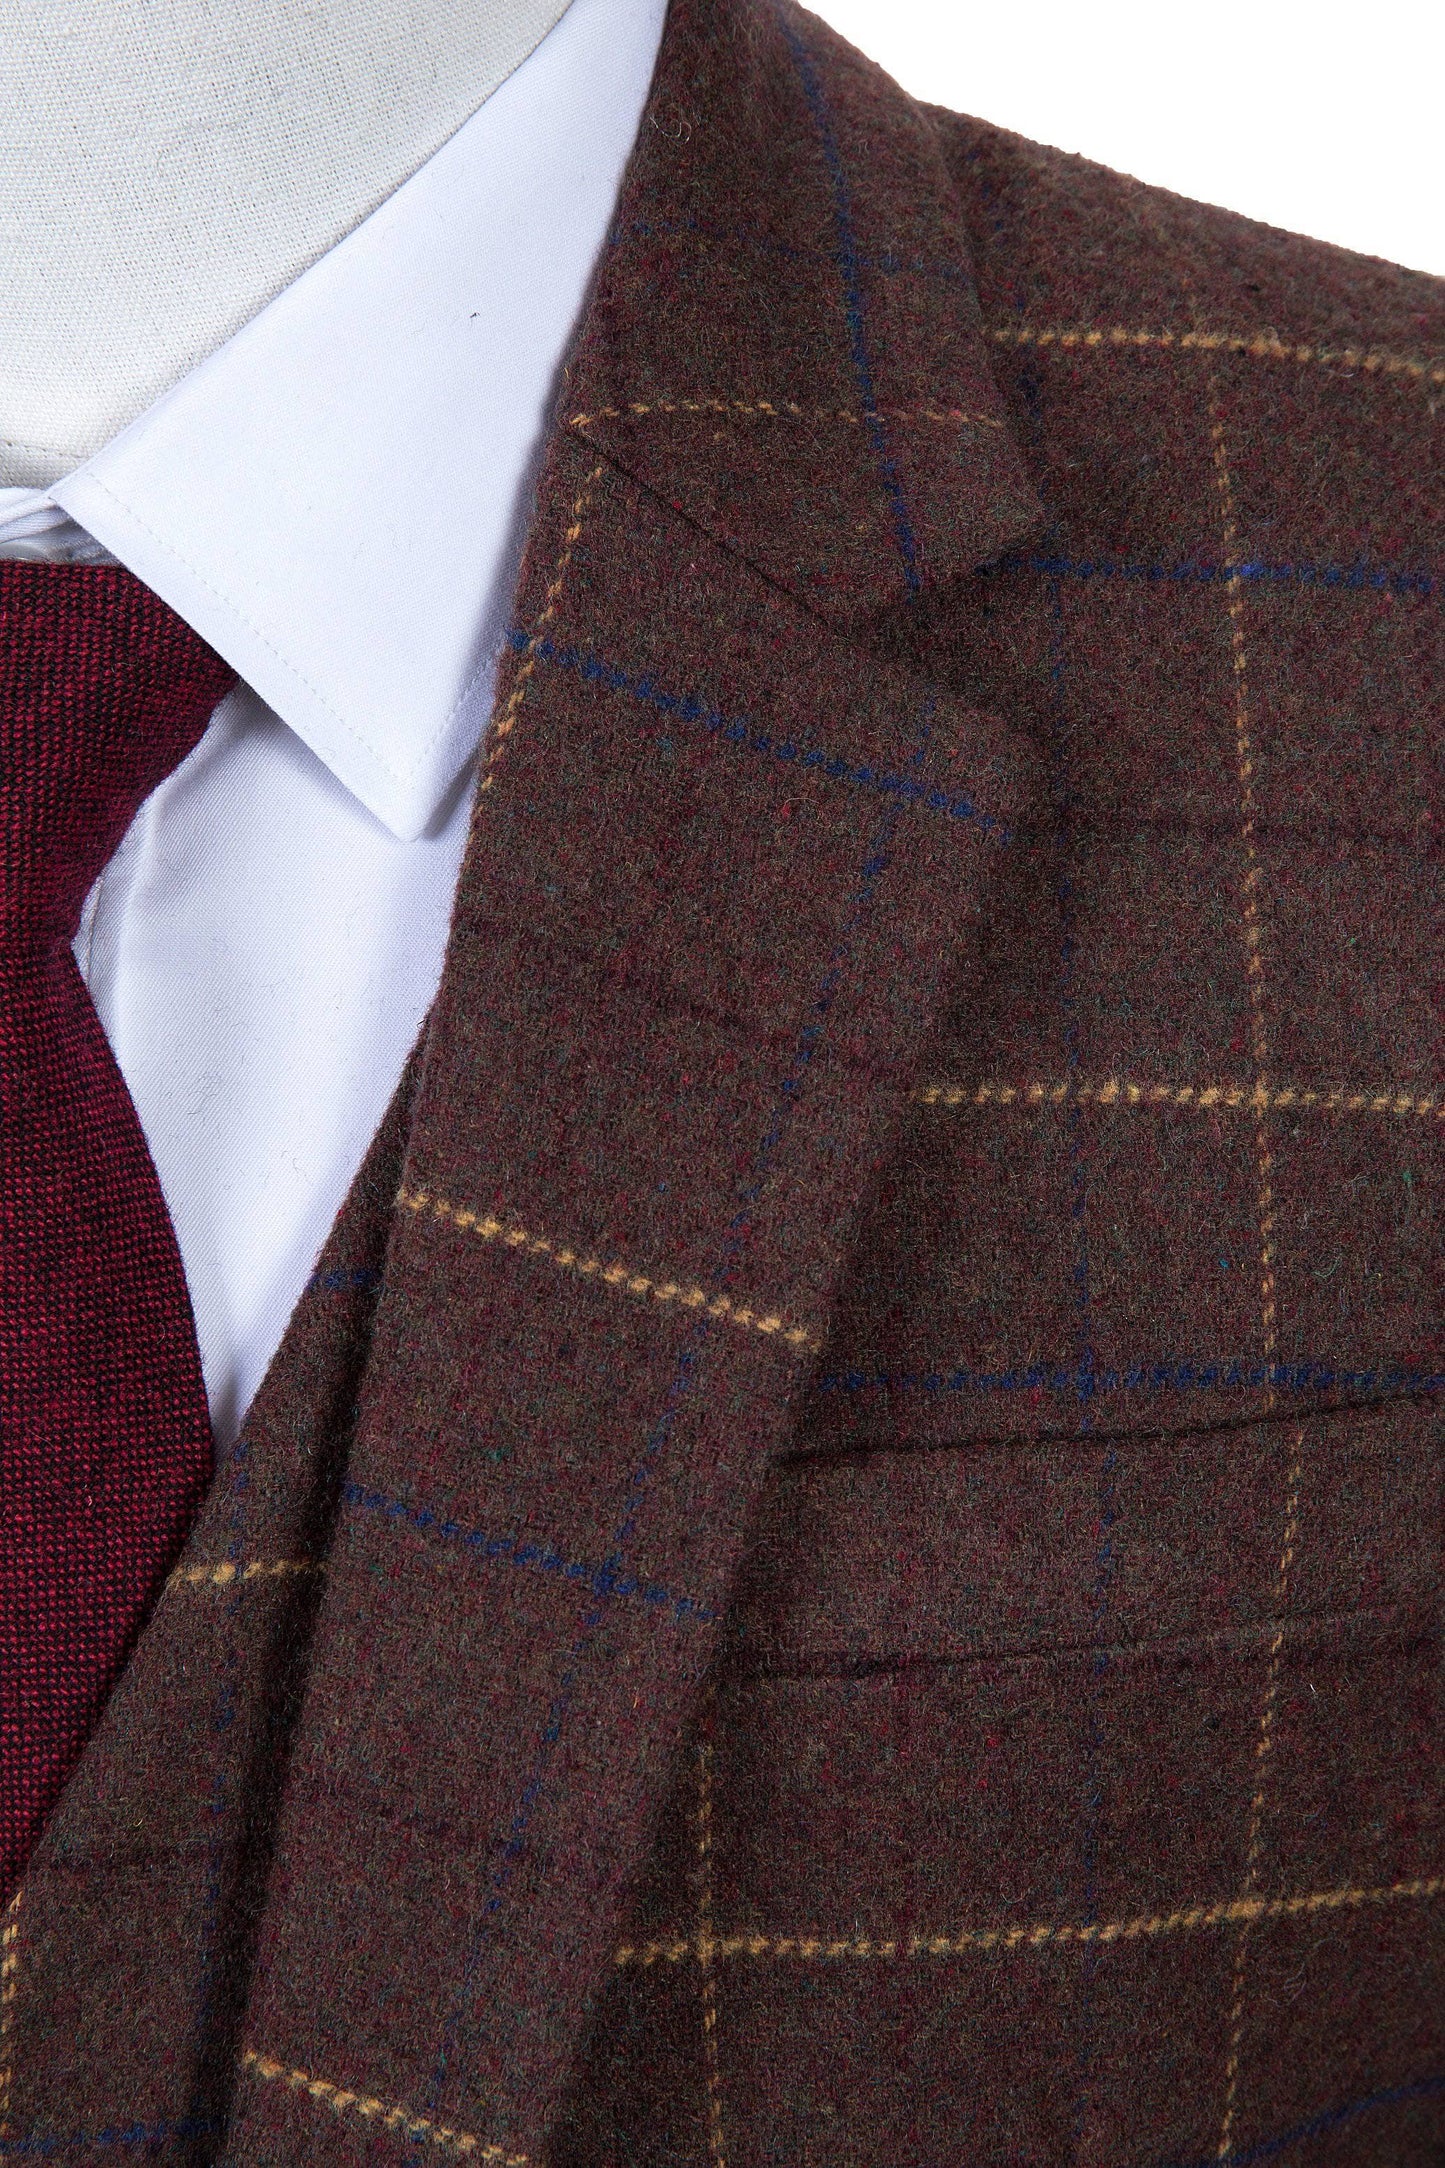 Brown Overcheck Twill Tweed Suit